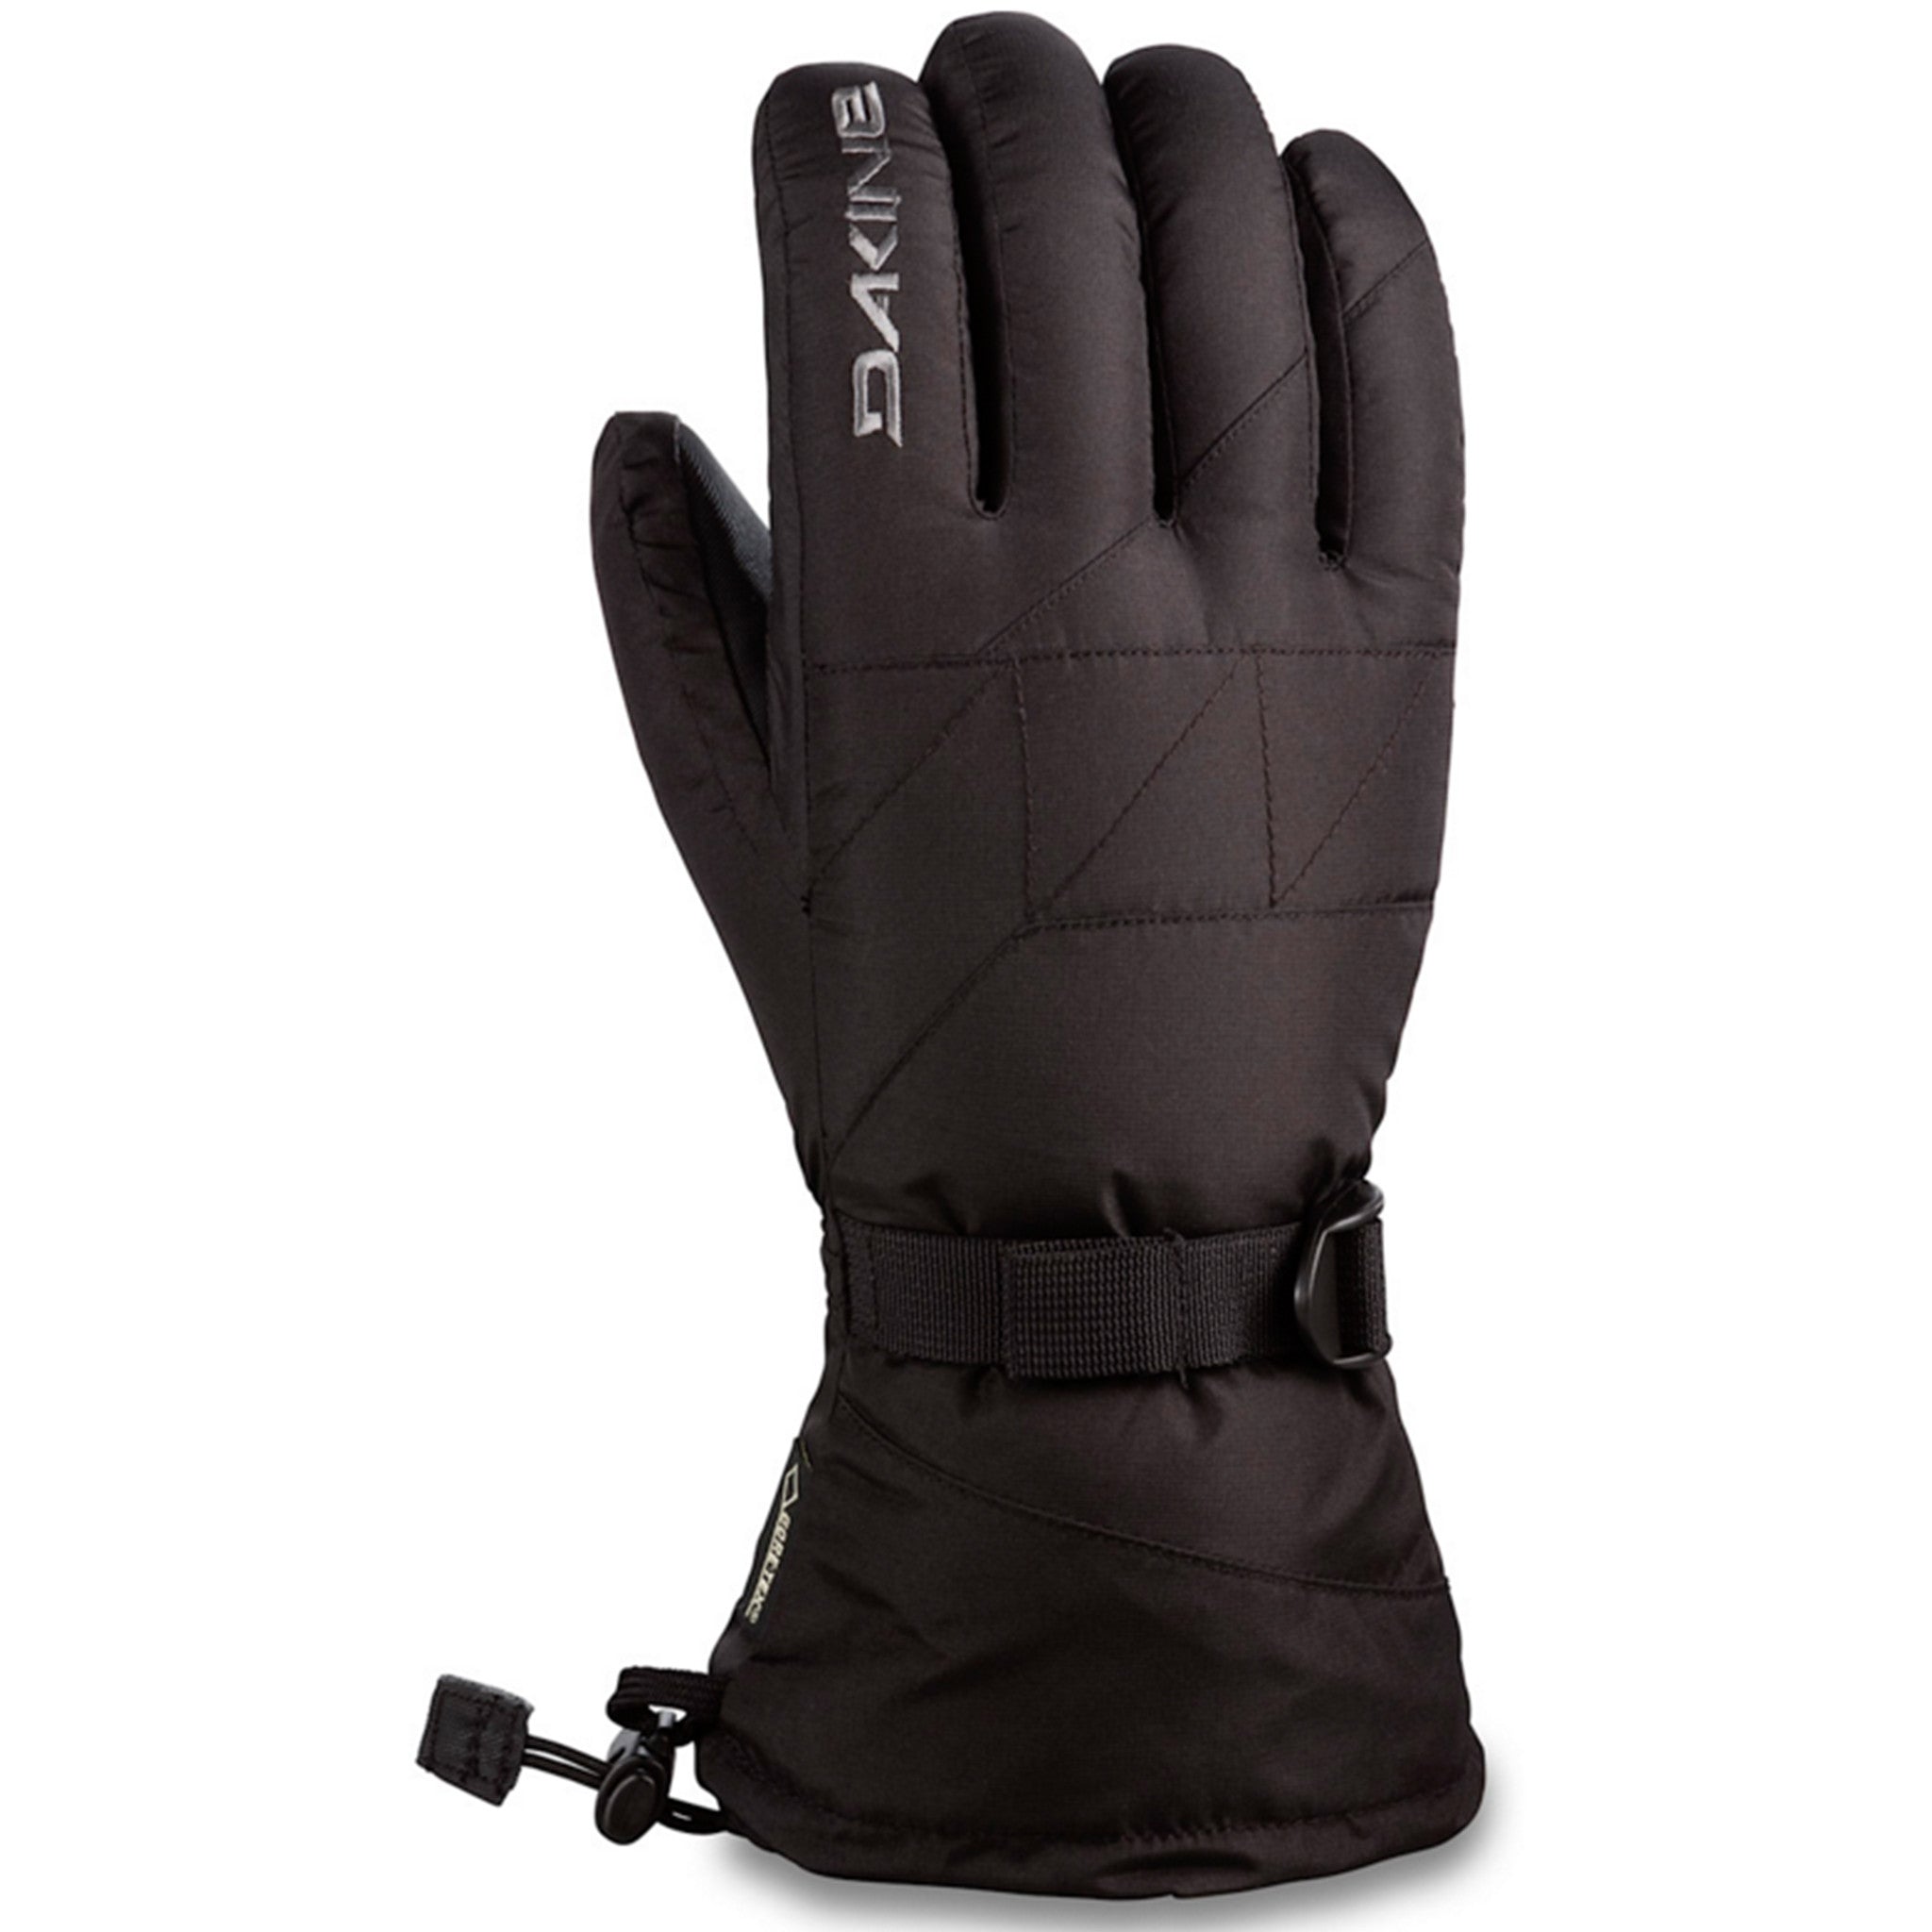 Frontier Glove Black